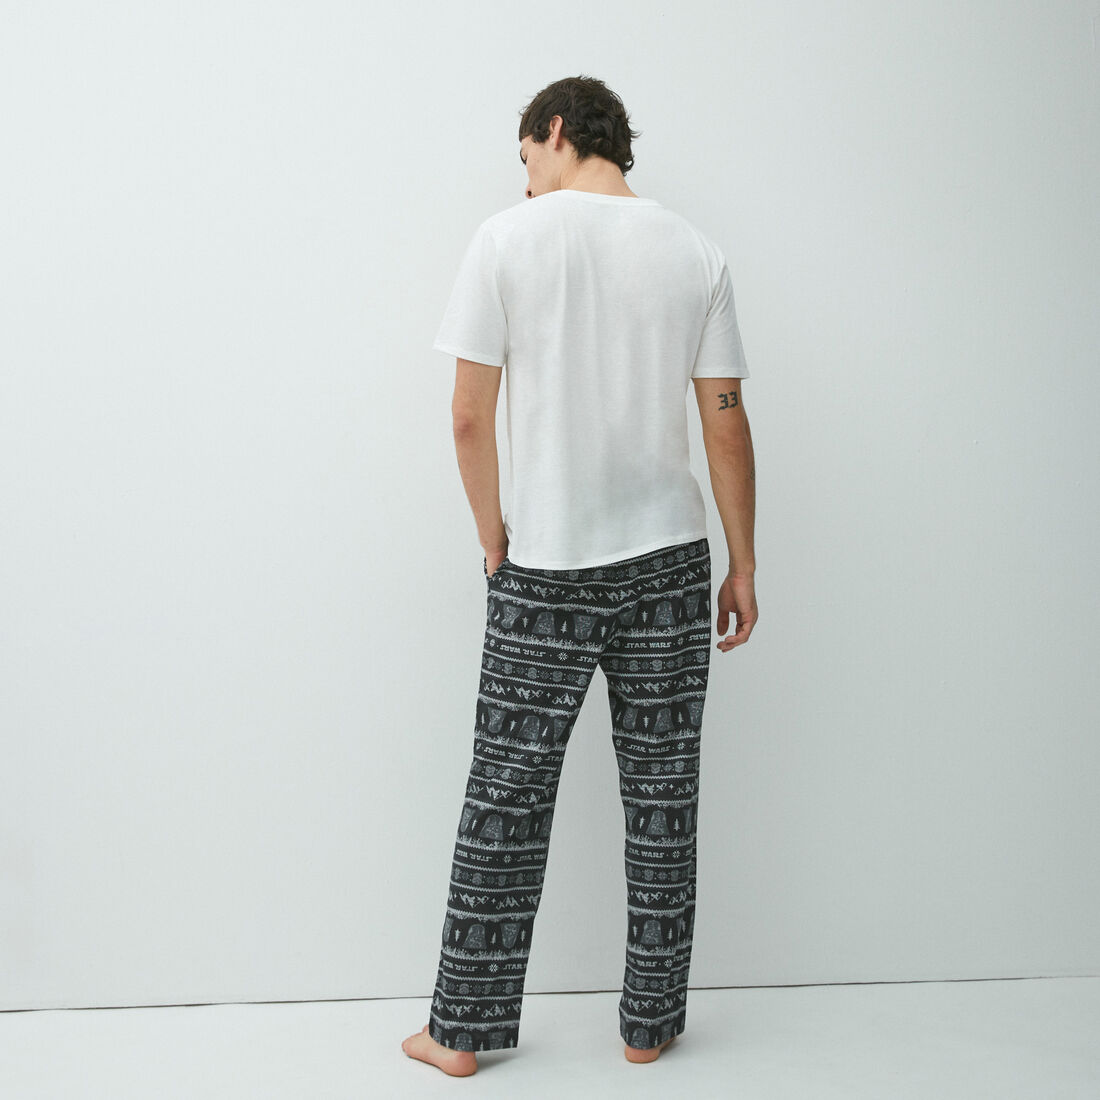 star wars jacquard print pyjama bottoms;